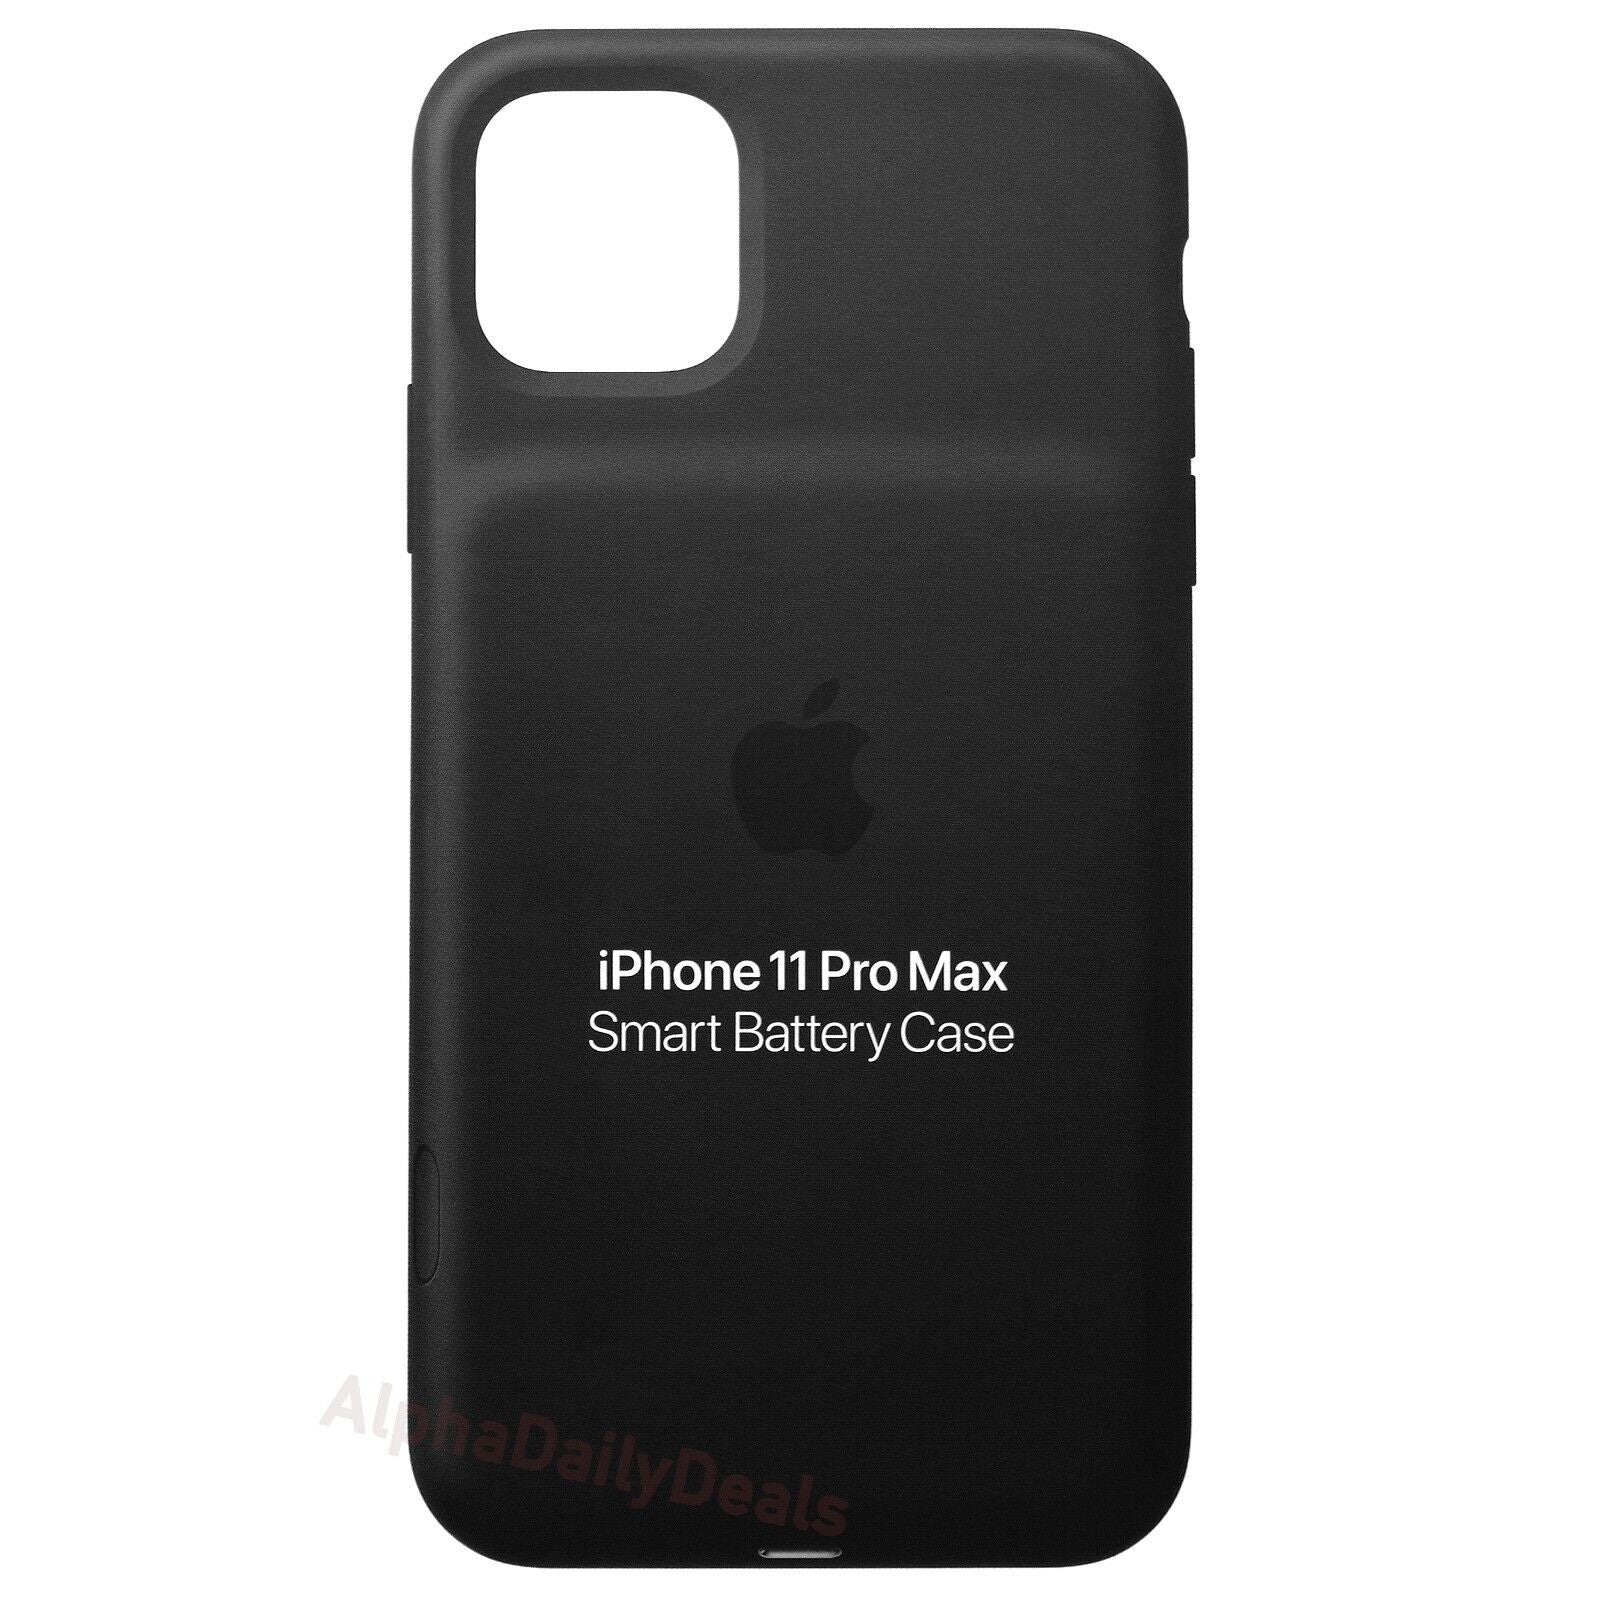 Genuine Apple iPhone 11 PRO MAX Smart Battery Case Black NEW SEALED